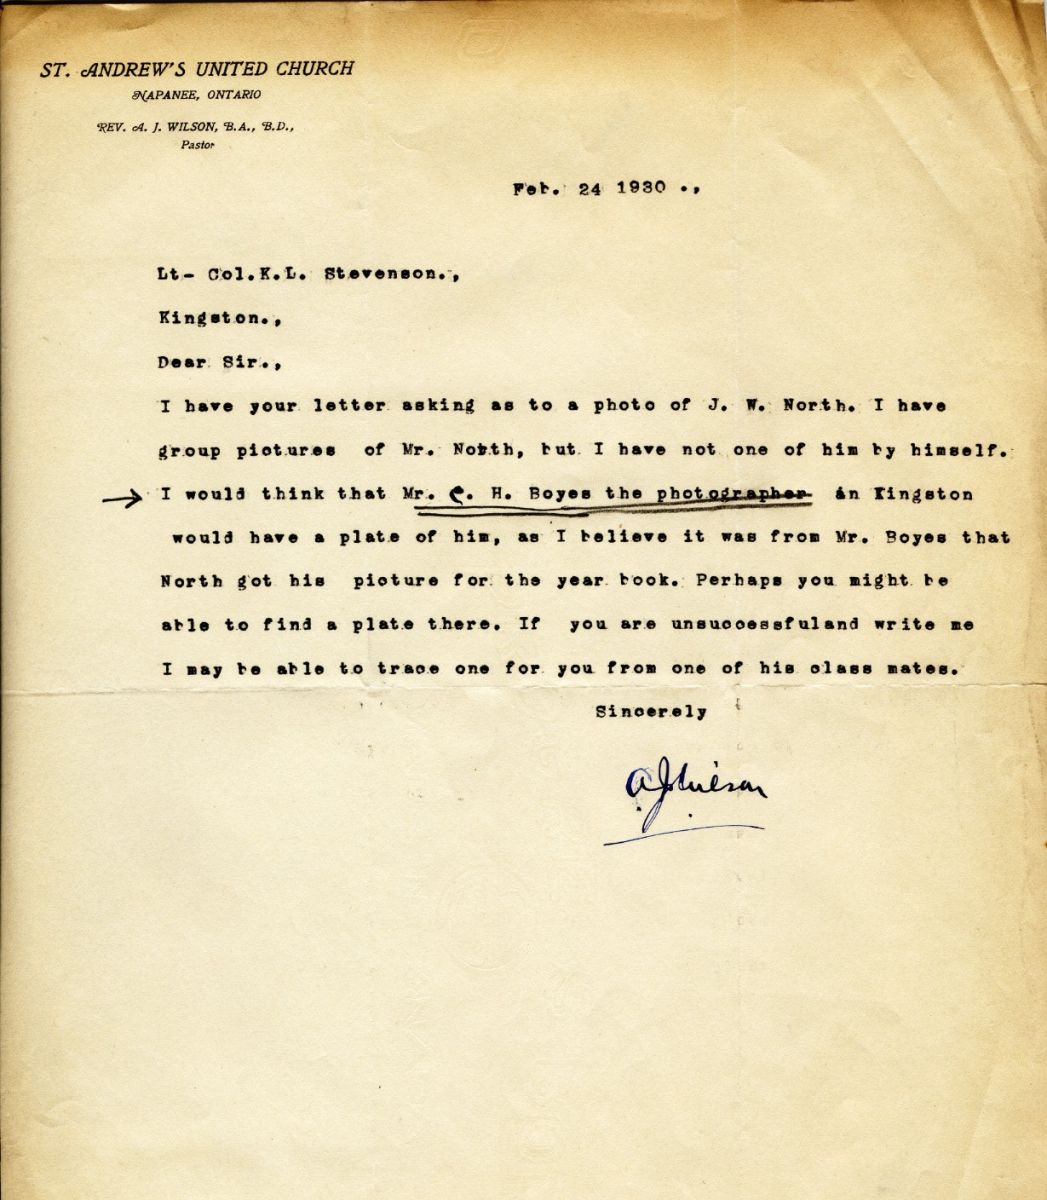 Letter from A.J. Wilson to Lt. Col. K.L. Stevenson, 24th February 1930